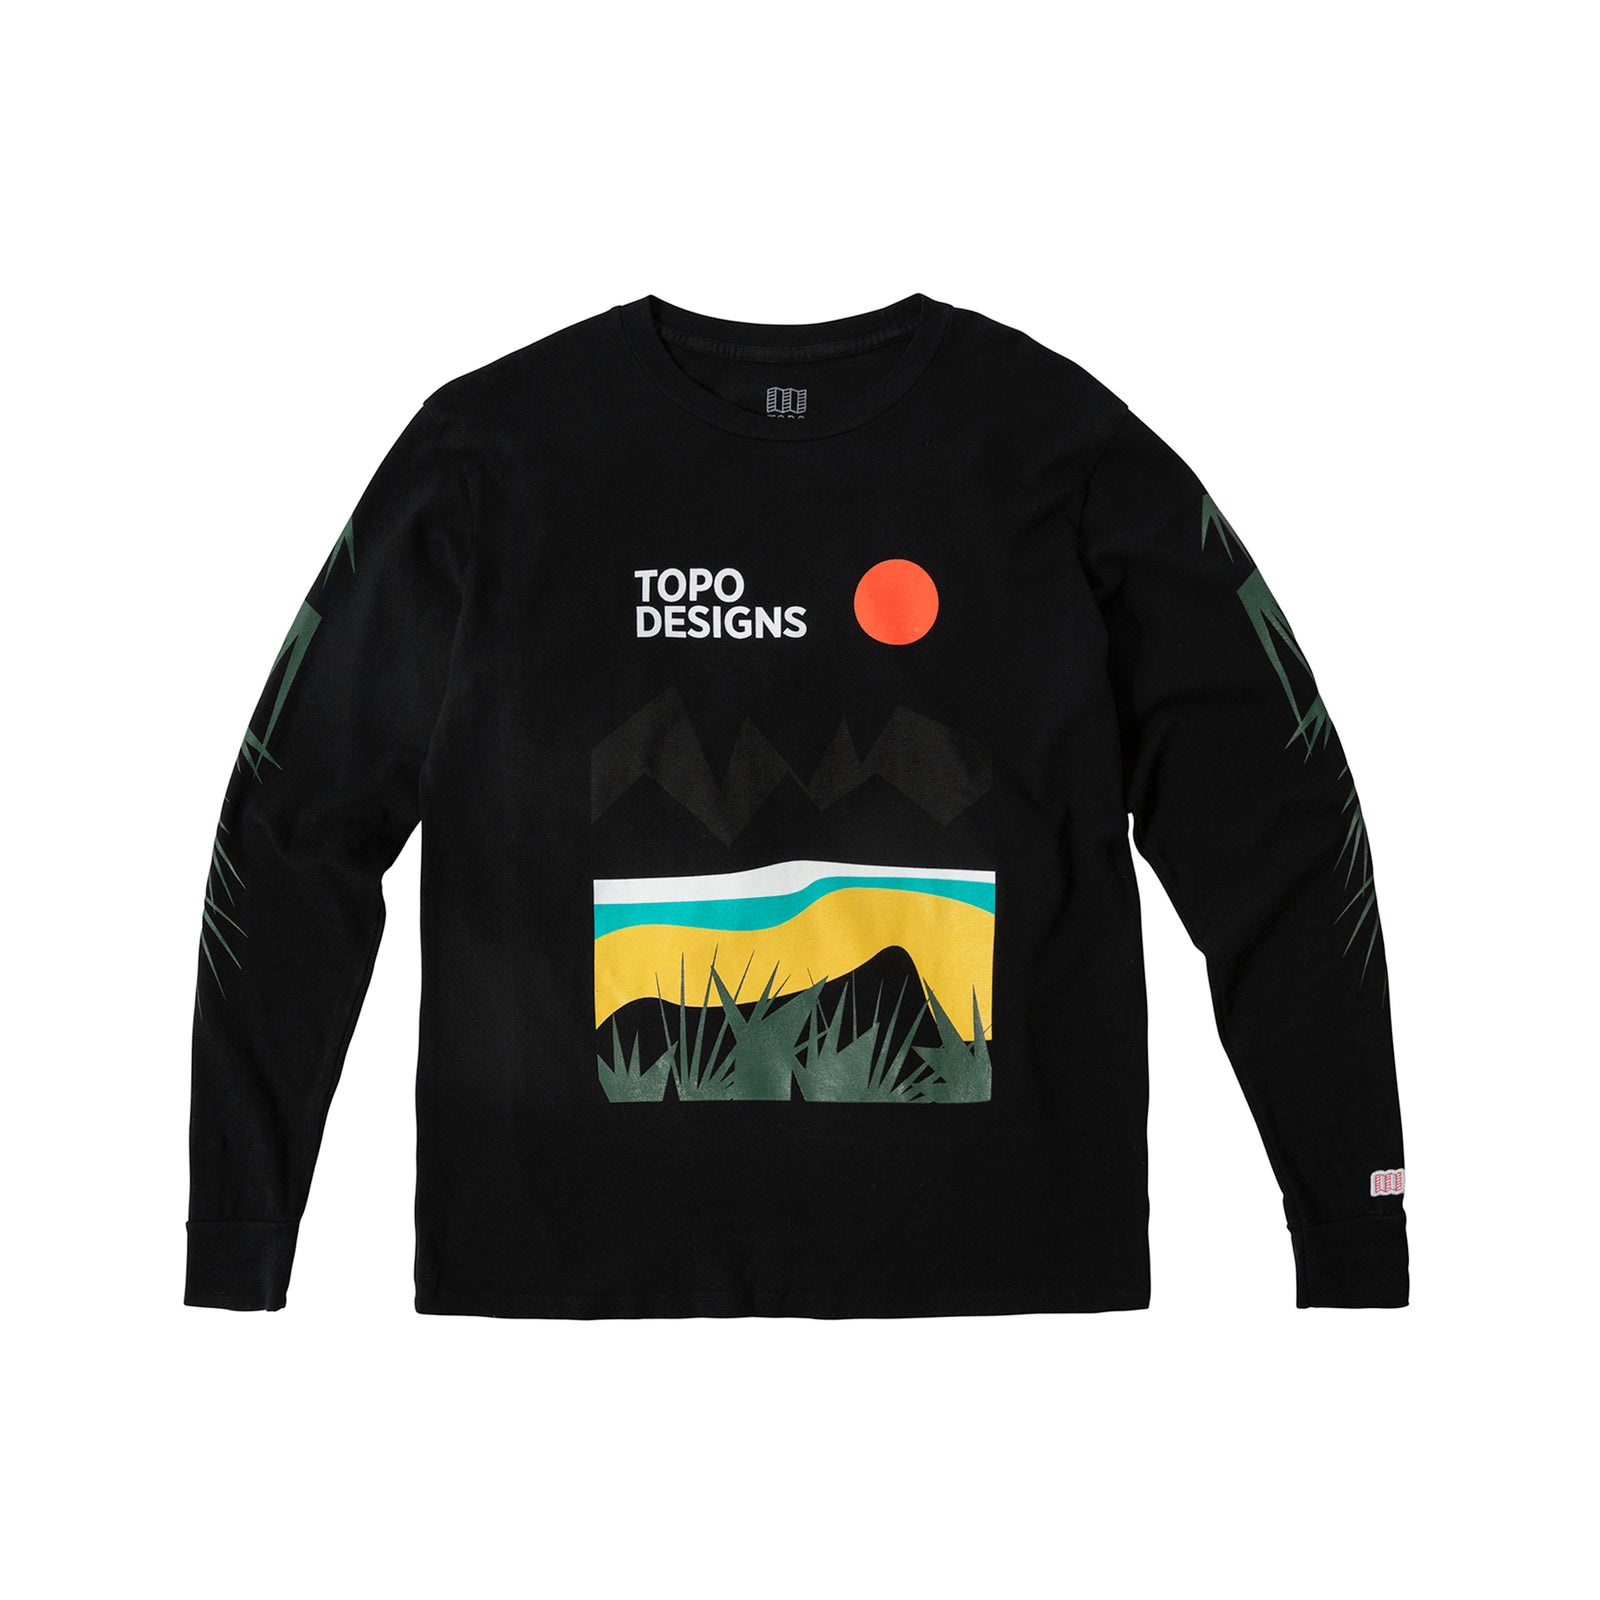 Topo Designs Men's Desert long sleeve 100% organic cotton graphic t-shirt in "Black".